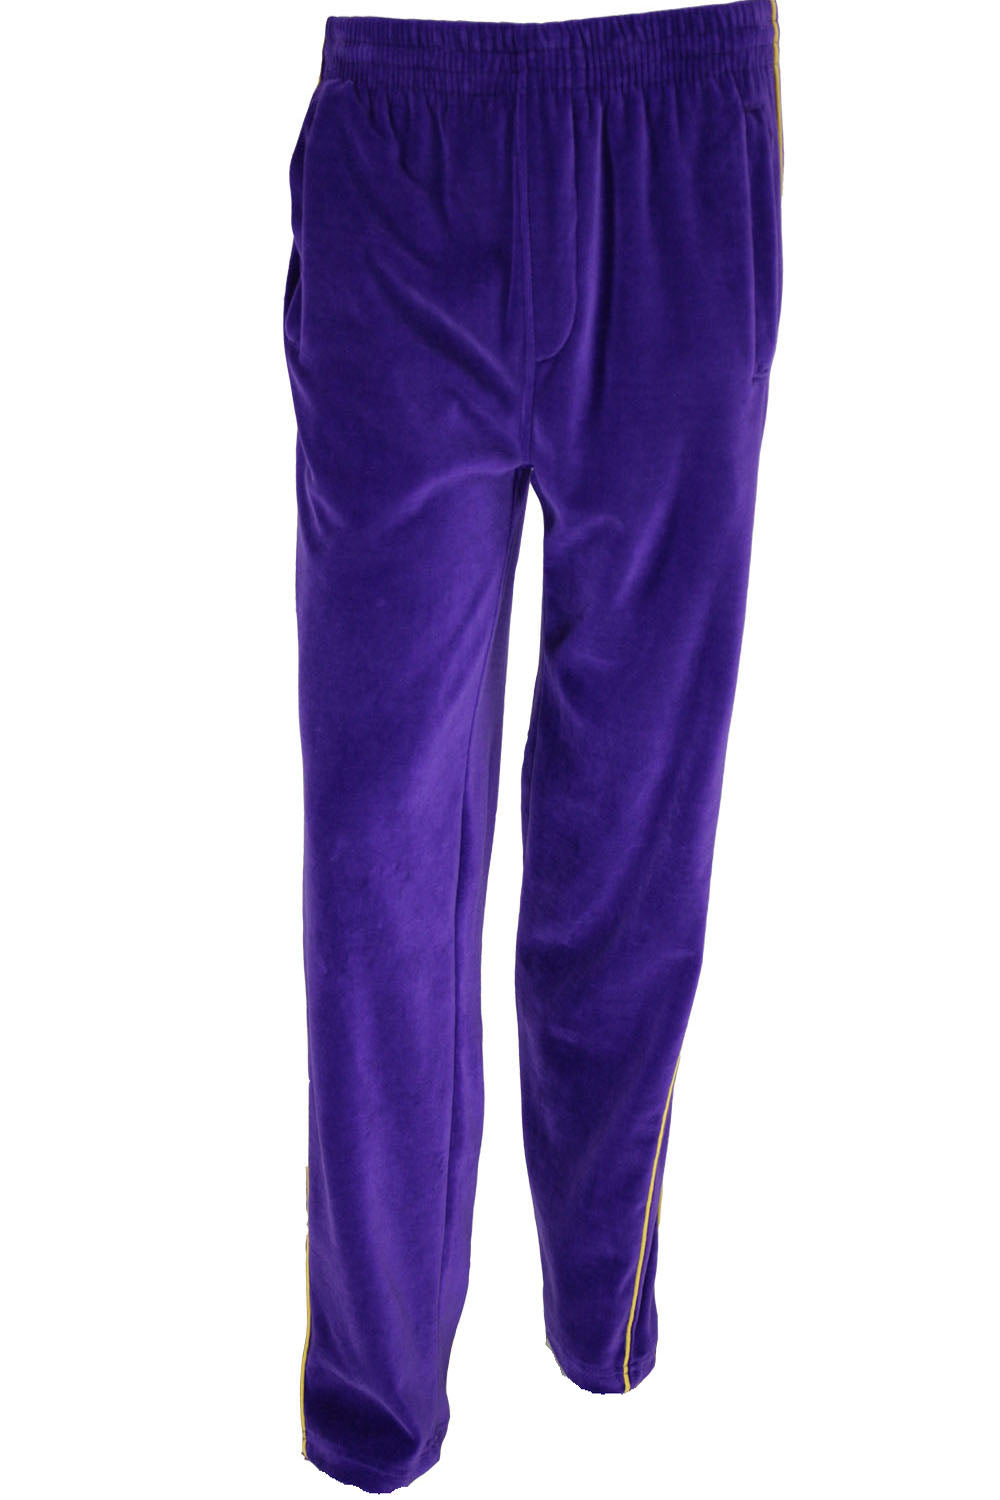 Buy Purple Track Pants for Women by Zelocity Online | Ajio.com